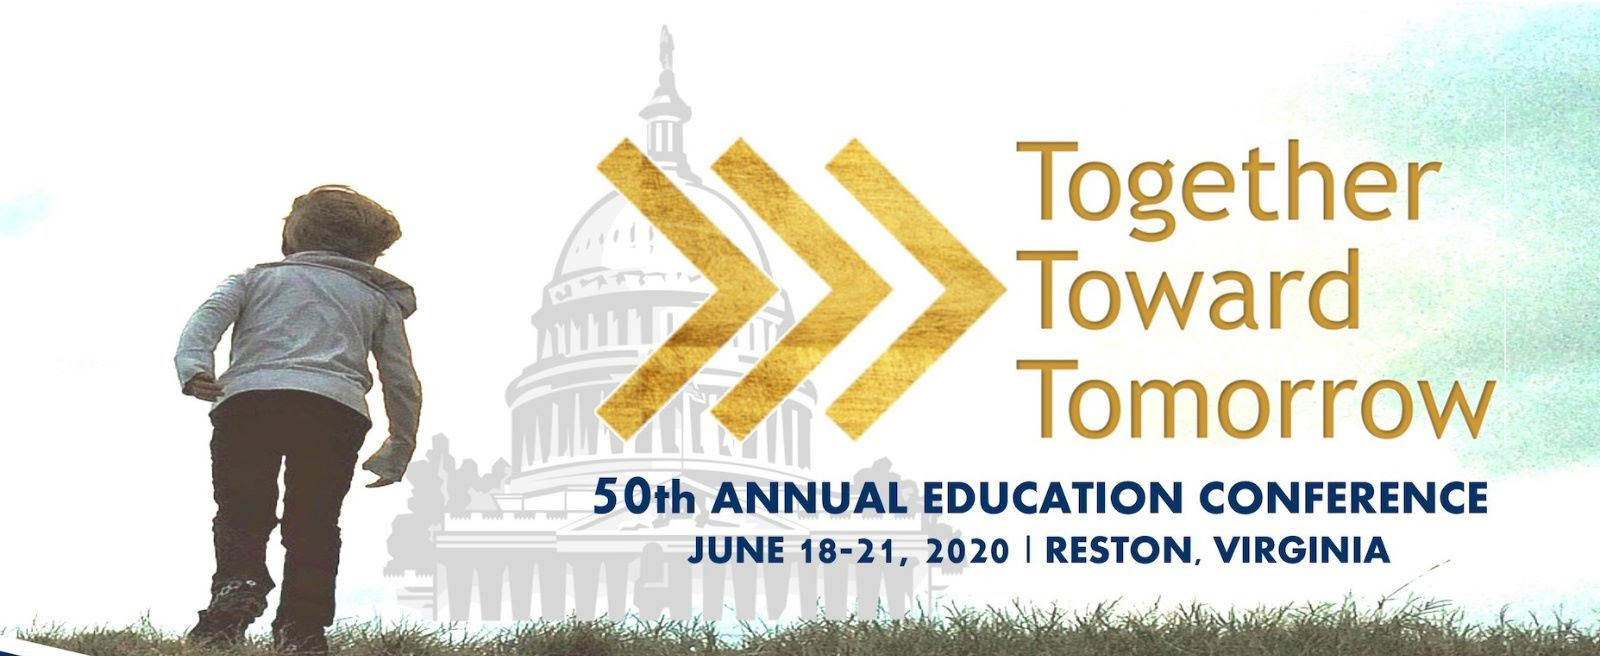 Together Toward Tomorrow: 50th annual education conference, June 2020, Reston VA